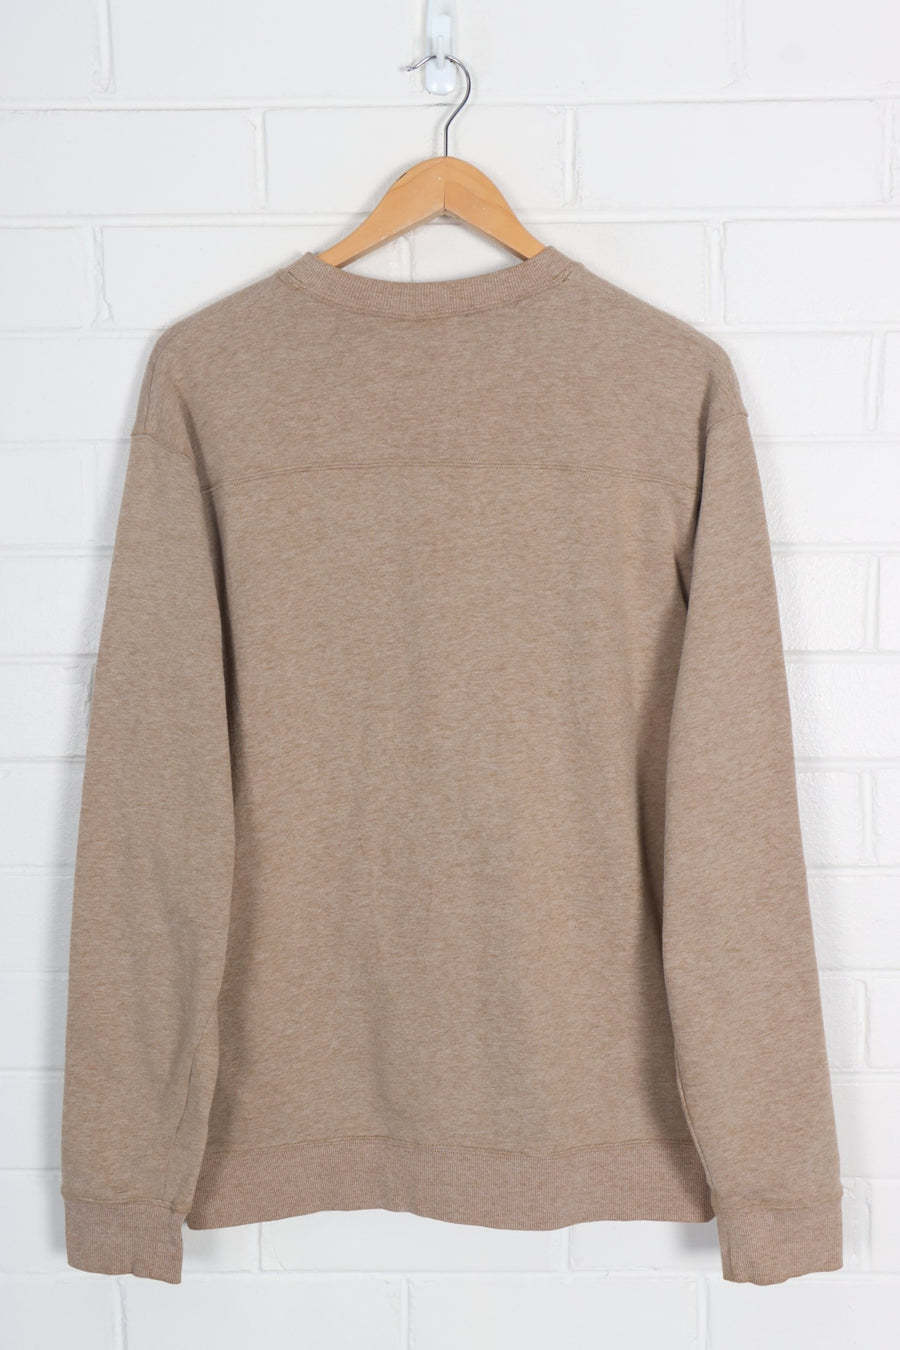 COLUMBIA Brown & Grey Embroidered Sweatshirt (M-L)